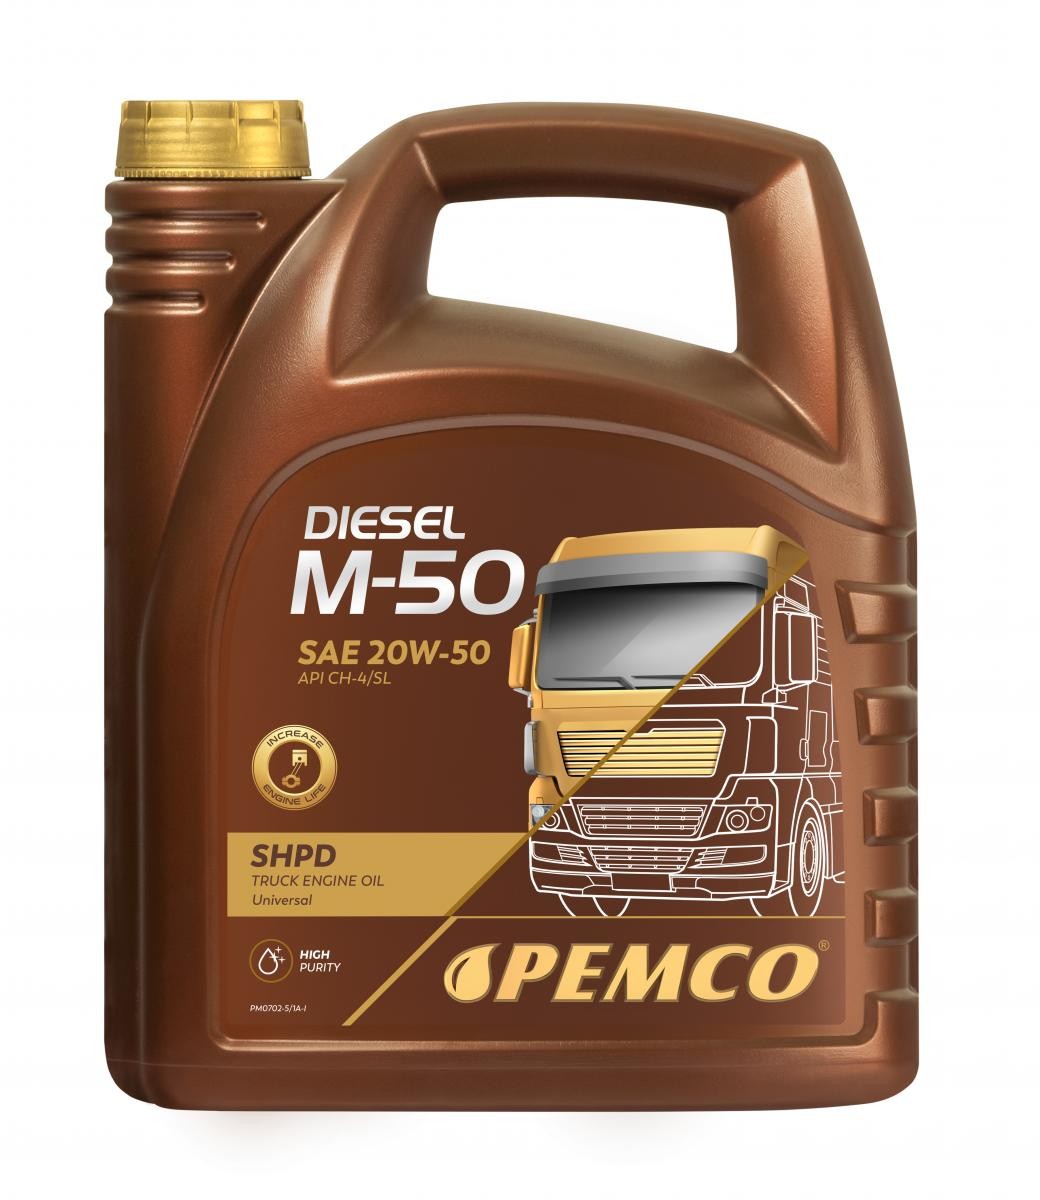 Automobile oil API CF 4 PEMCO - PM0702-5 Truck SHPD, DIESEL M-50 SHPD